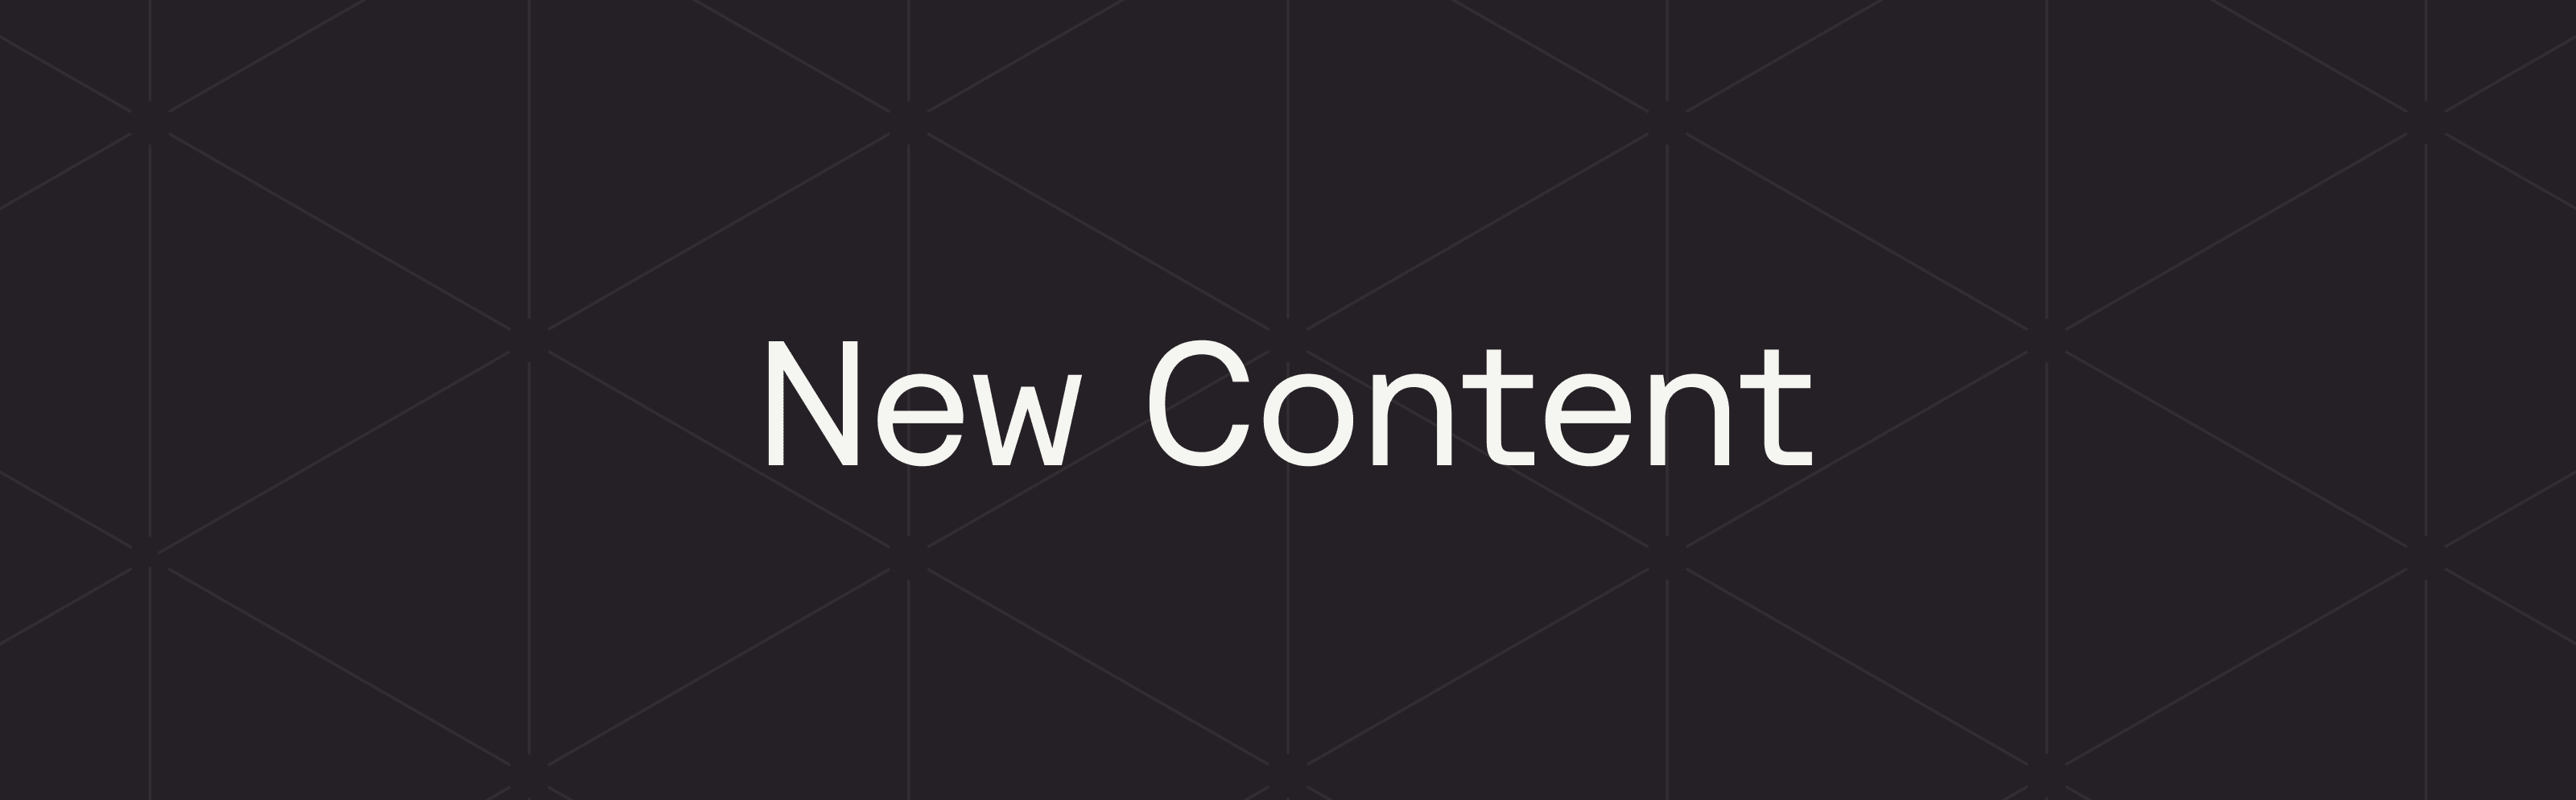 New Content